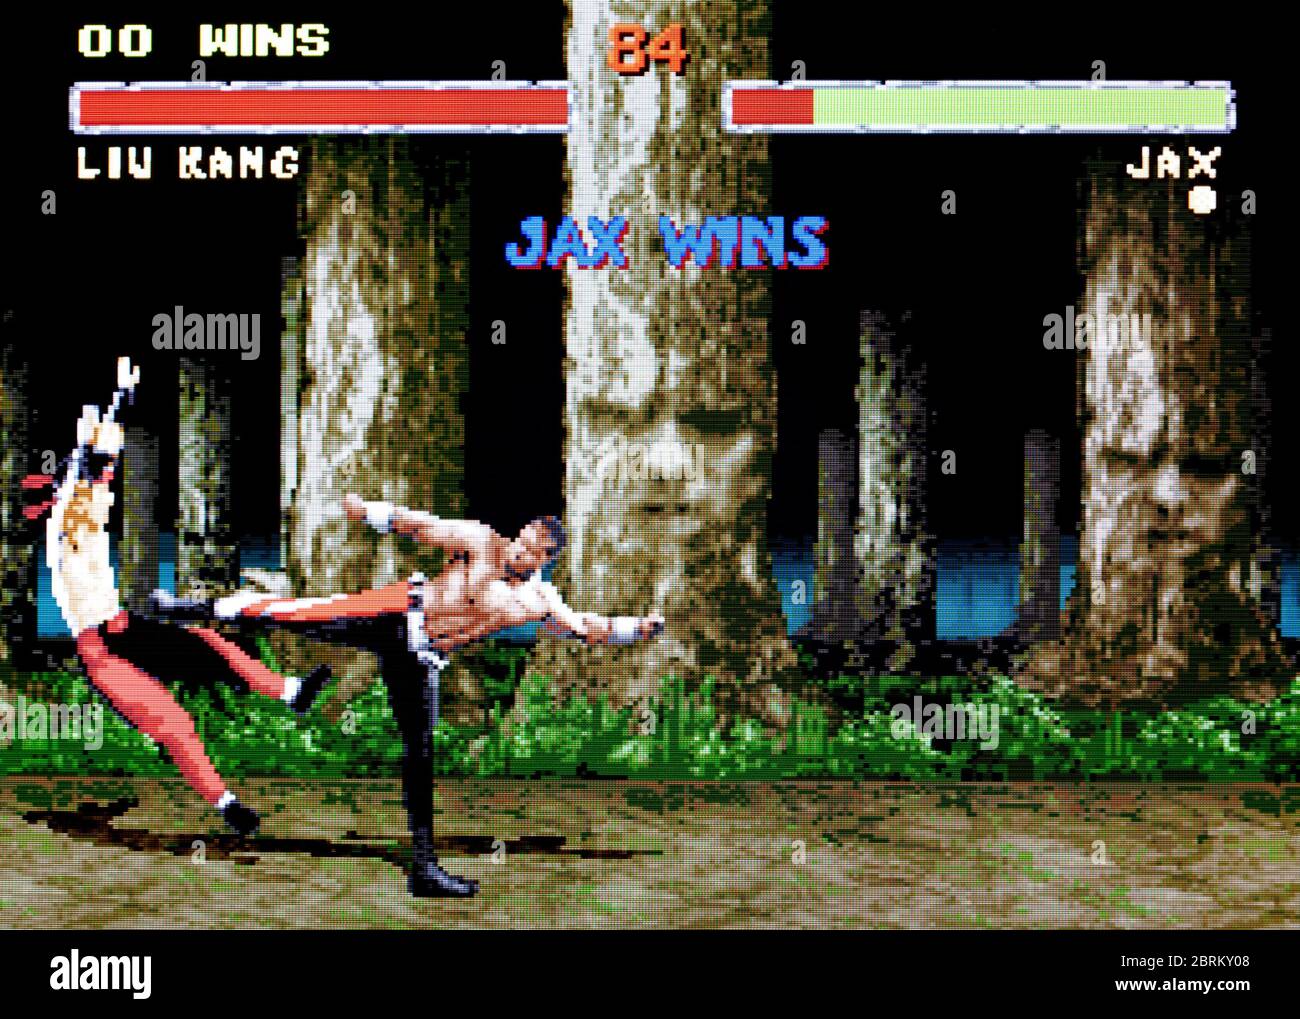 Mortal kombat game hi-res stock photography and images - Alamy